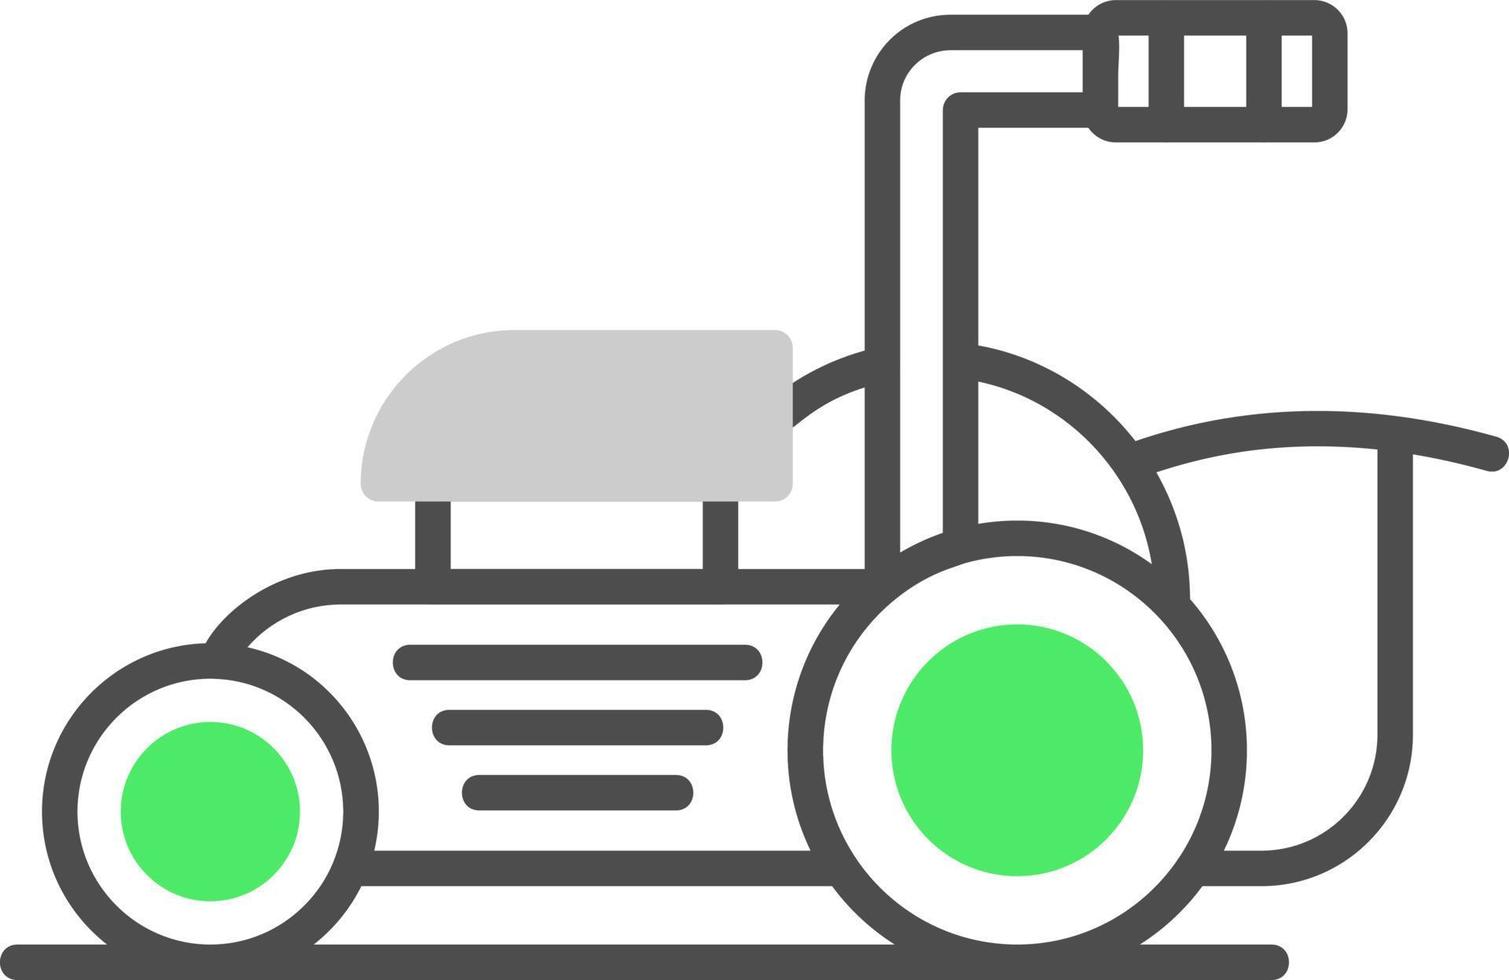 Lawnmower Creative Icon Design vector